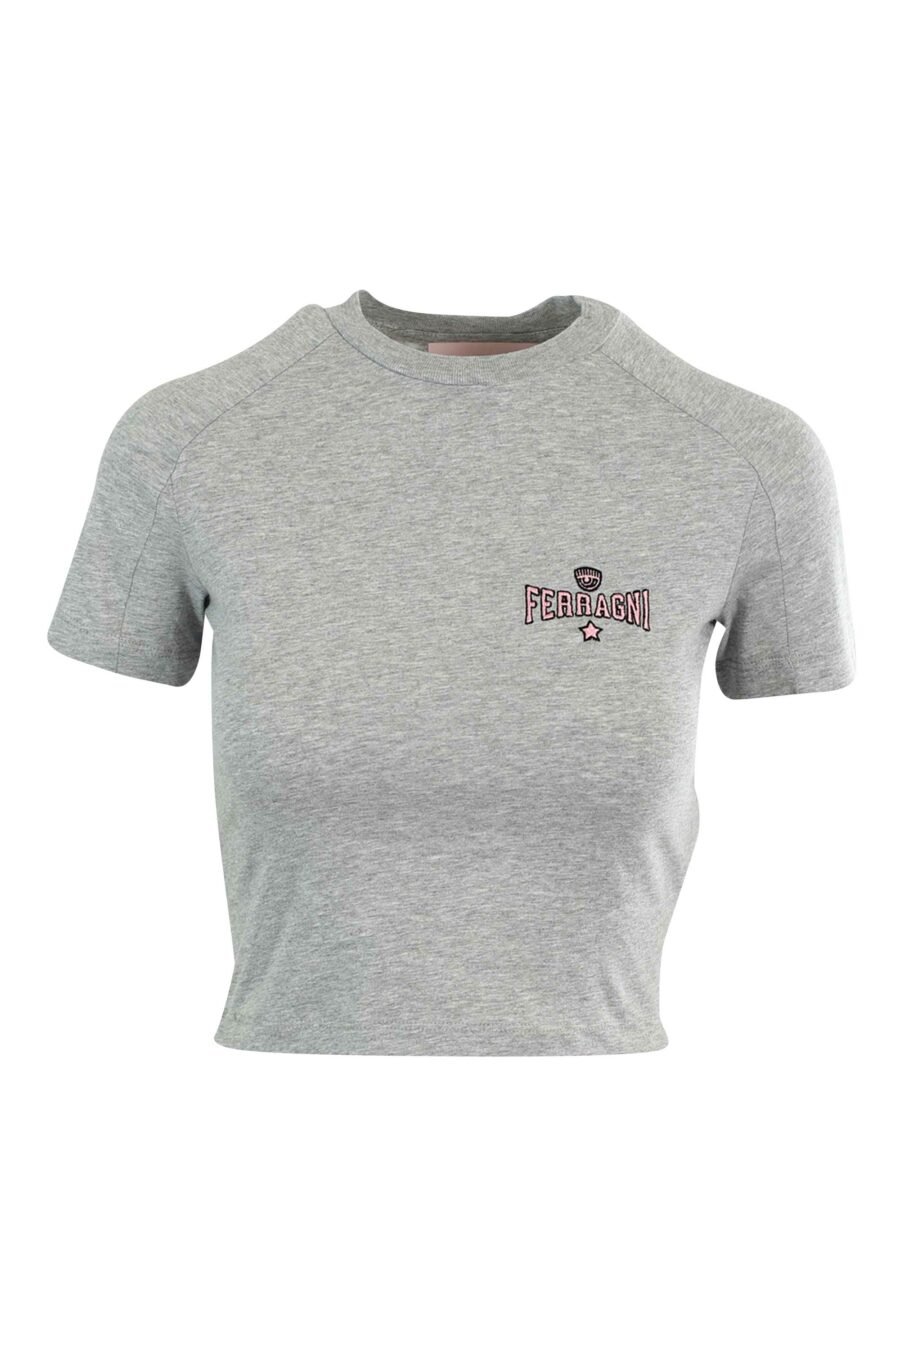 Camiseta gris con minilogo rosa "ferragni" - 8052672415936